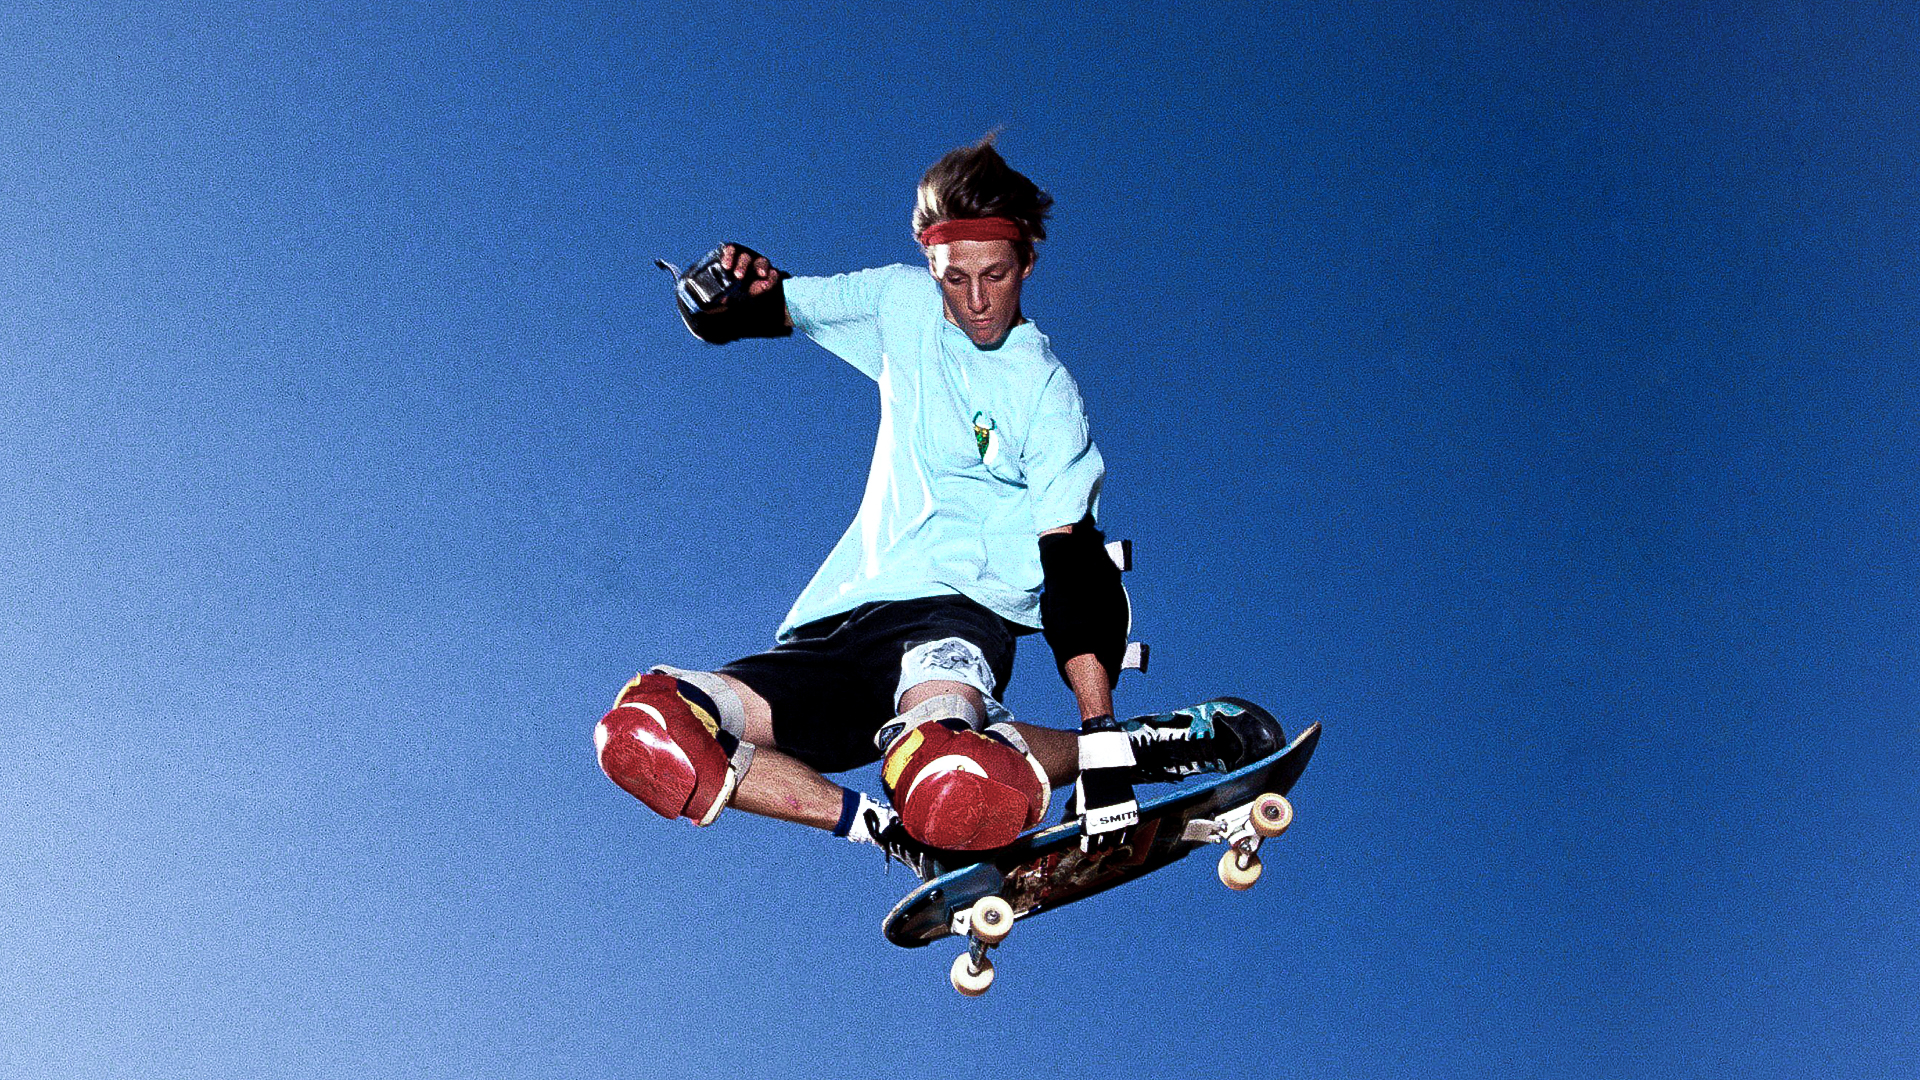 Tony Hawk's Pro Skater – Wikipédia, a enciclopédia livre